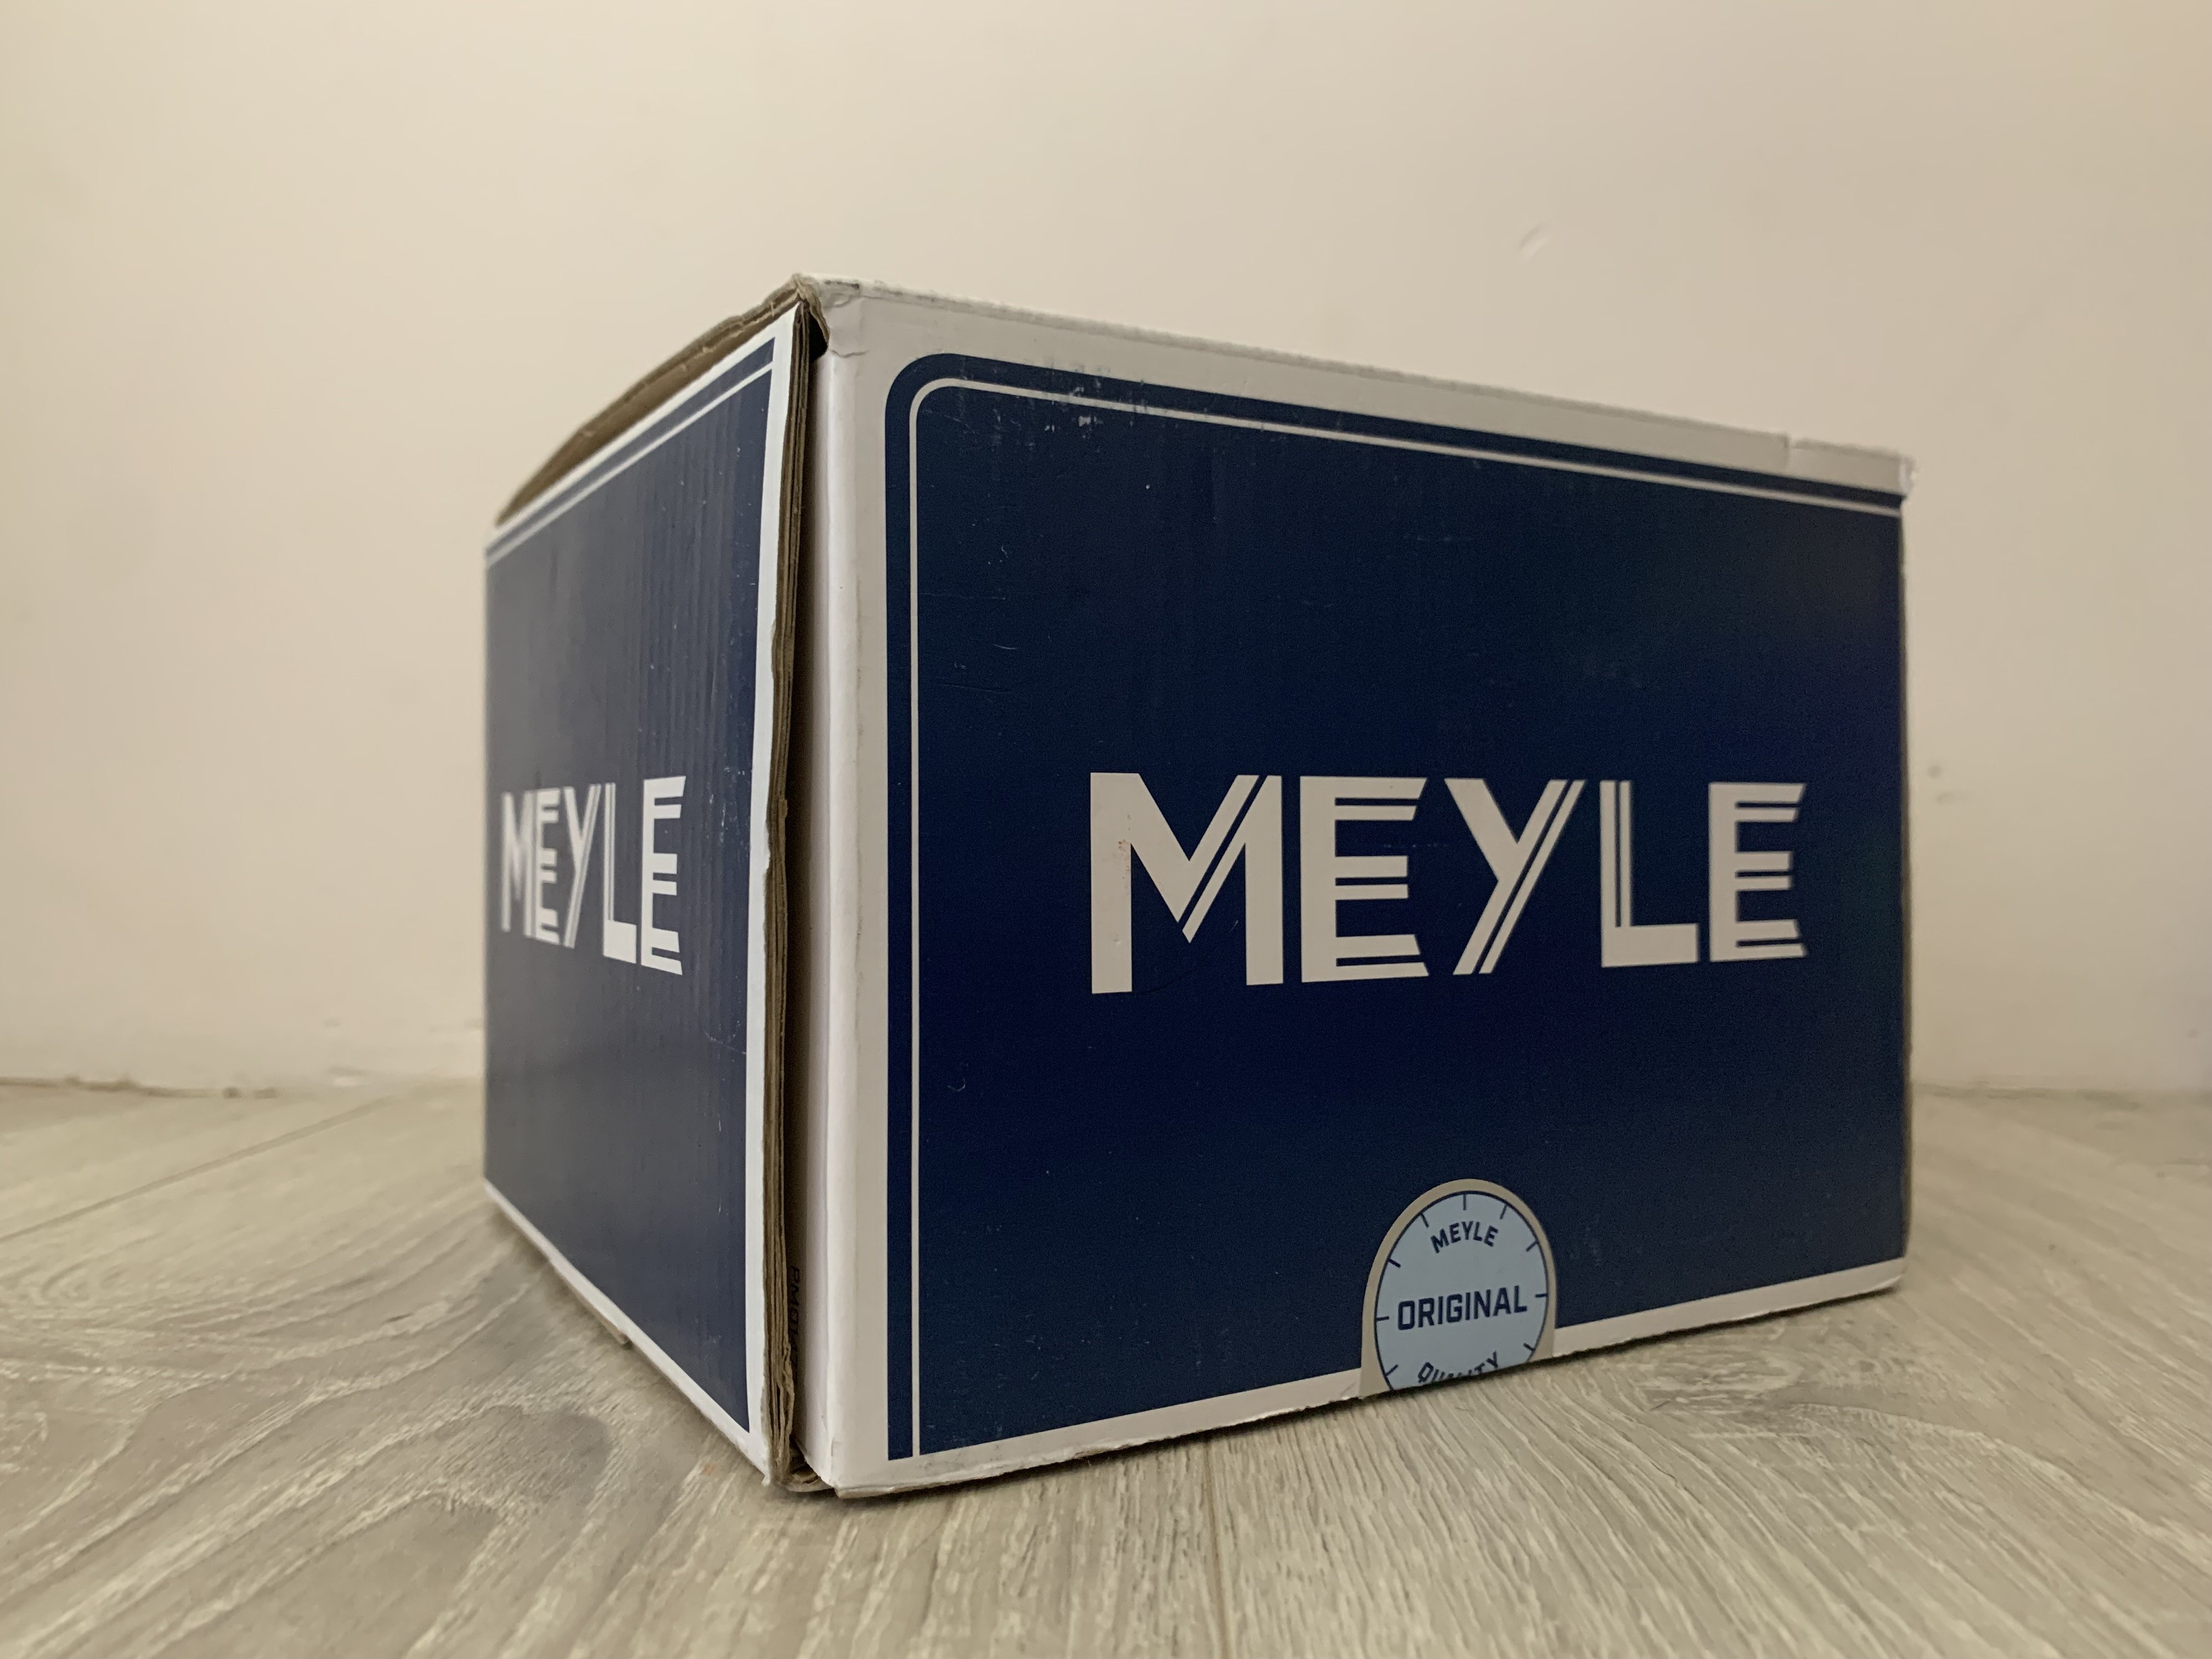 ступица Meyle в упаковке